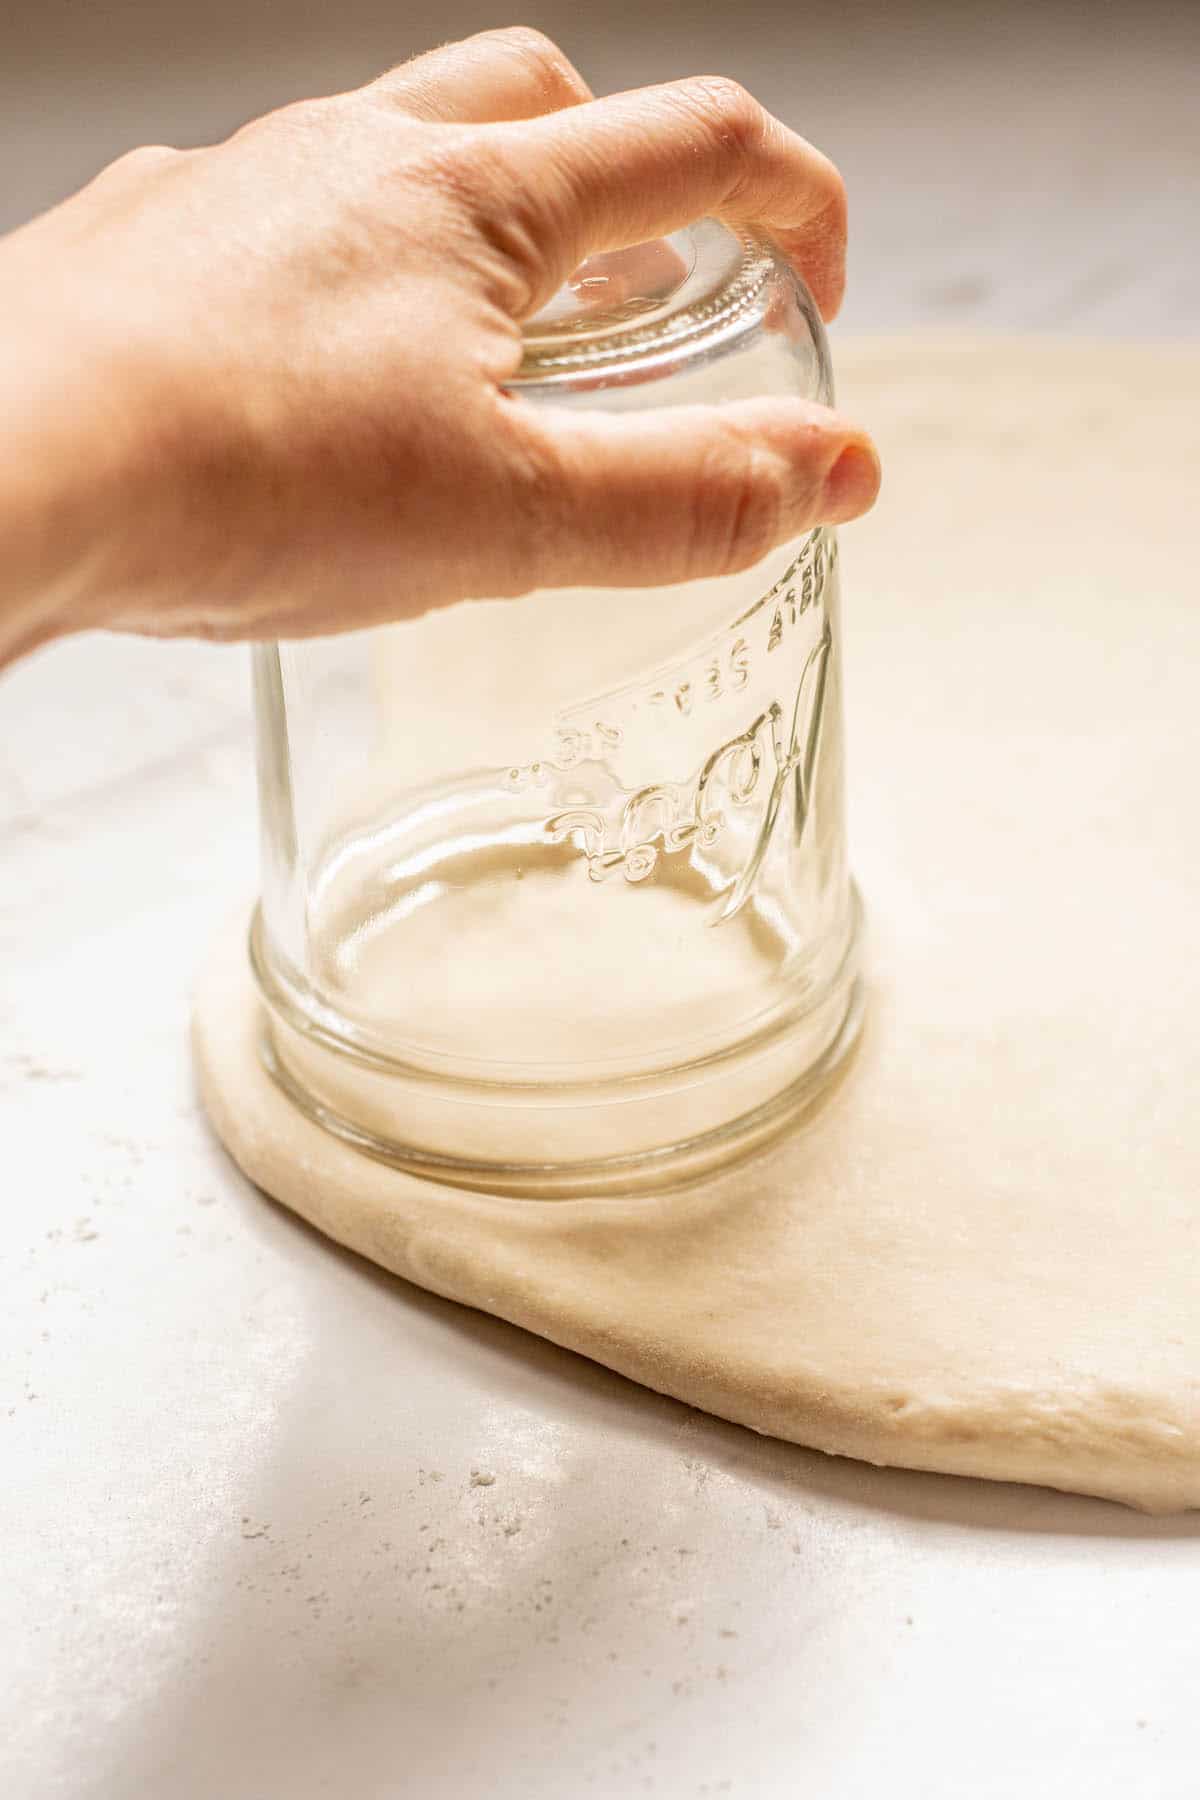 jar cutting dough.